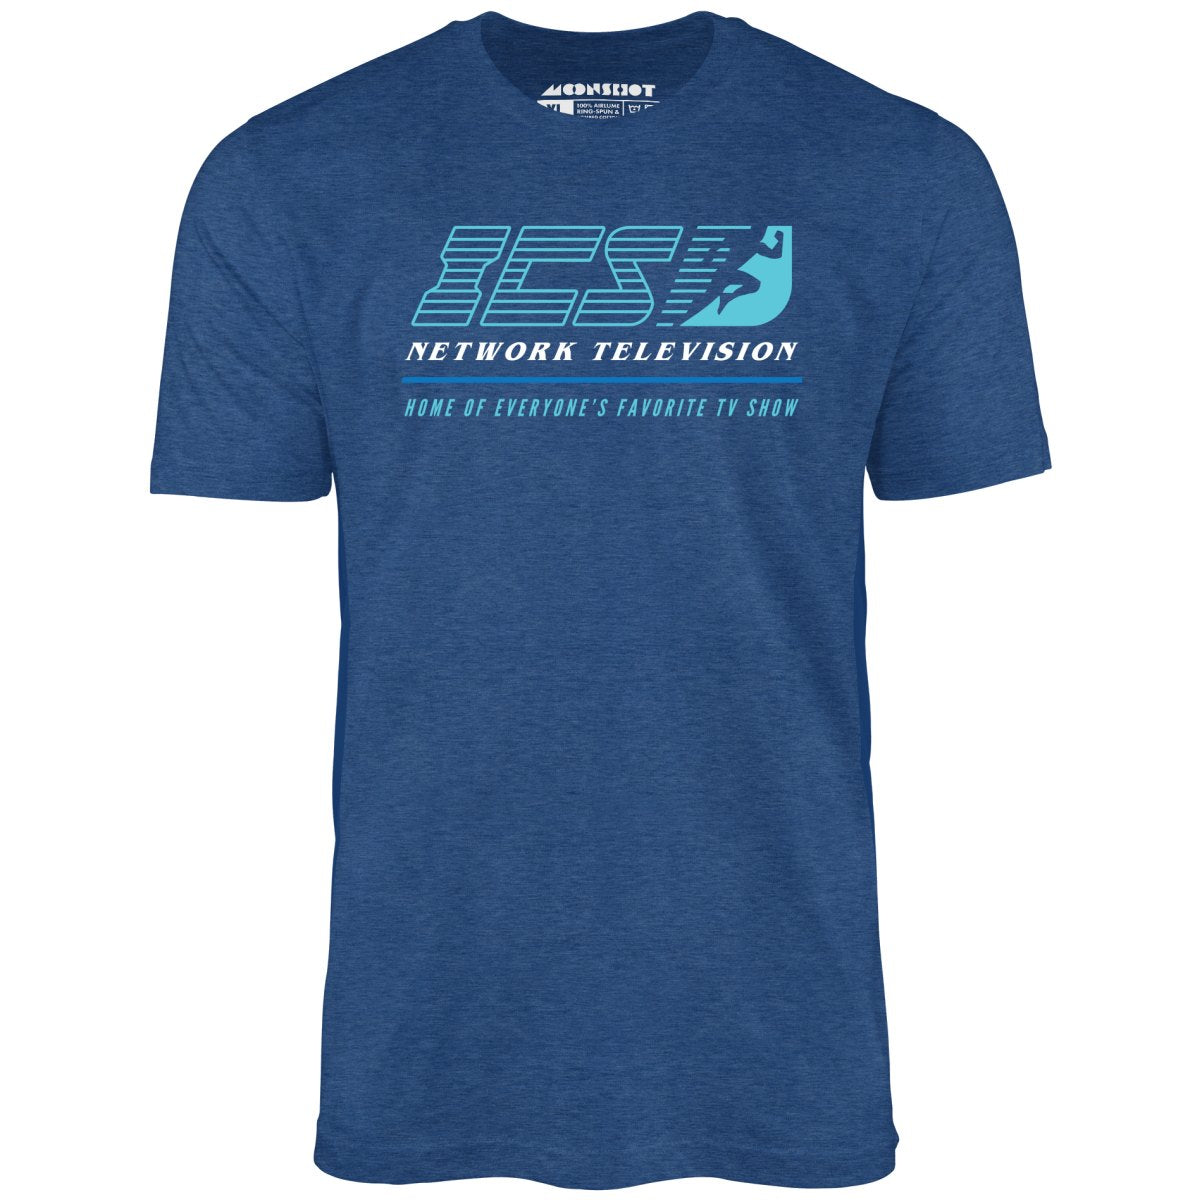 Running Man - ICS Network Television - Unisex T-Shirt